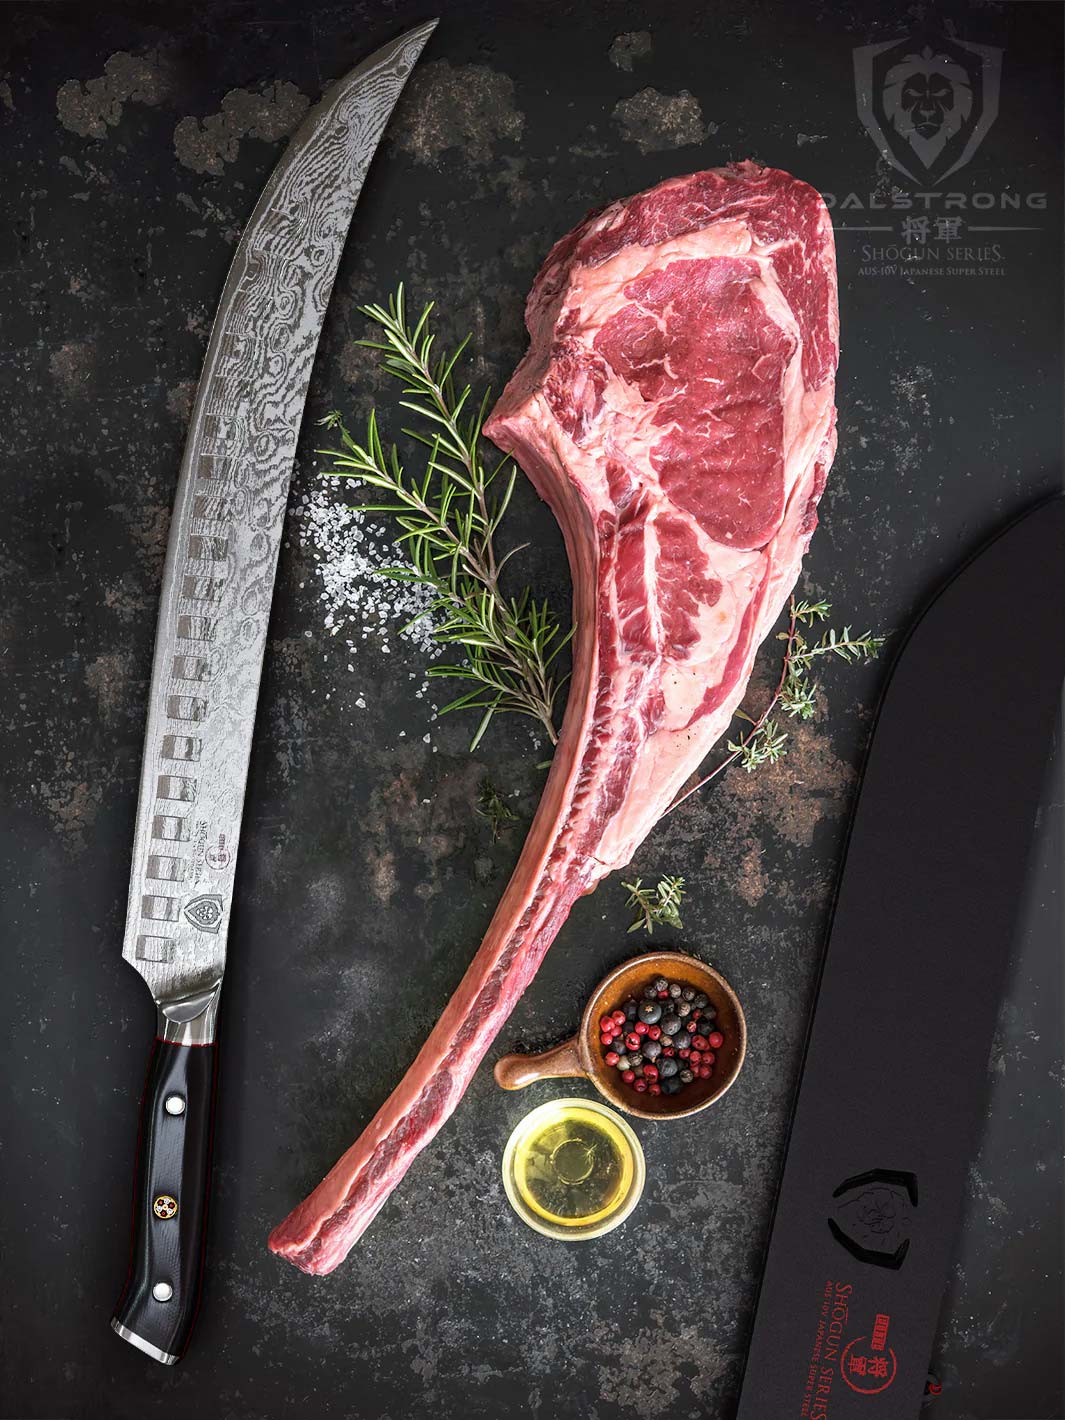 Butcher & Breaking Knife 12.5" | Shogun Series ELITE | Dalstrong ©